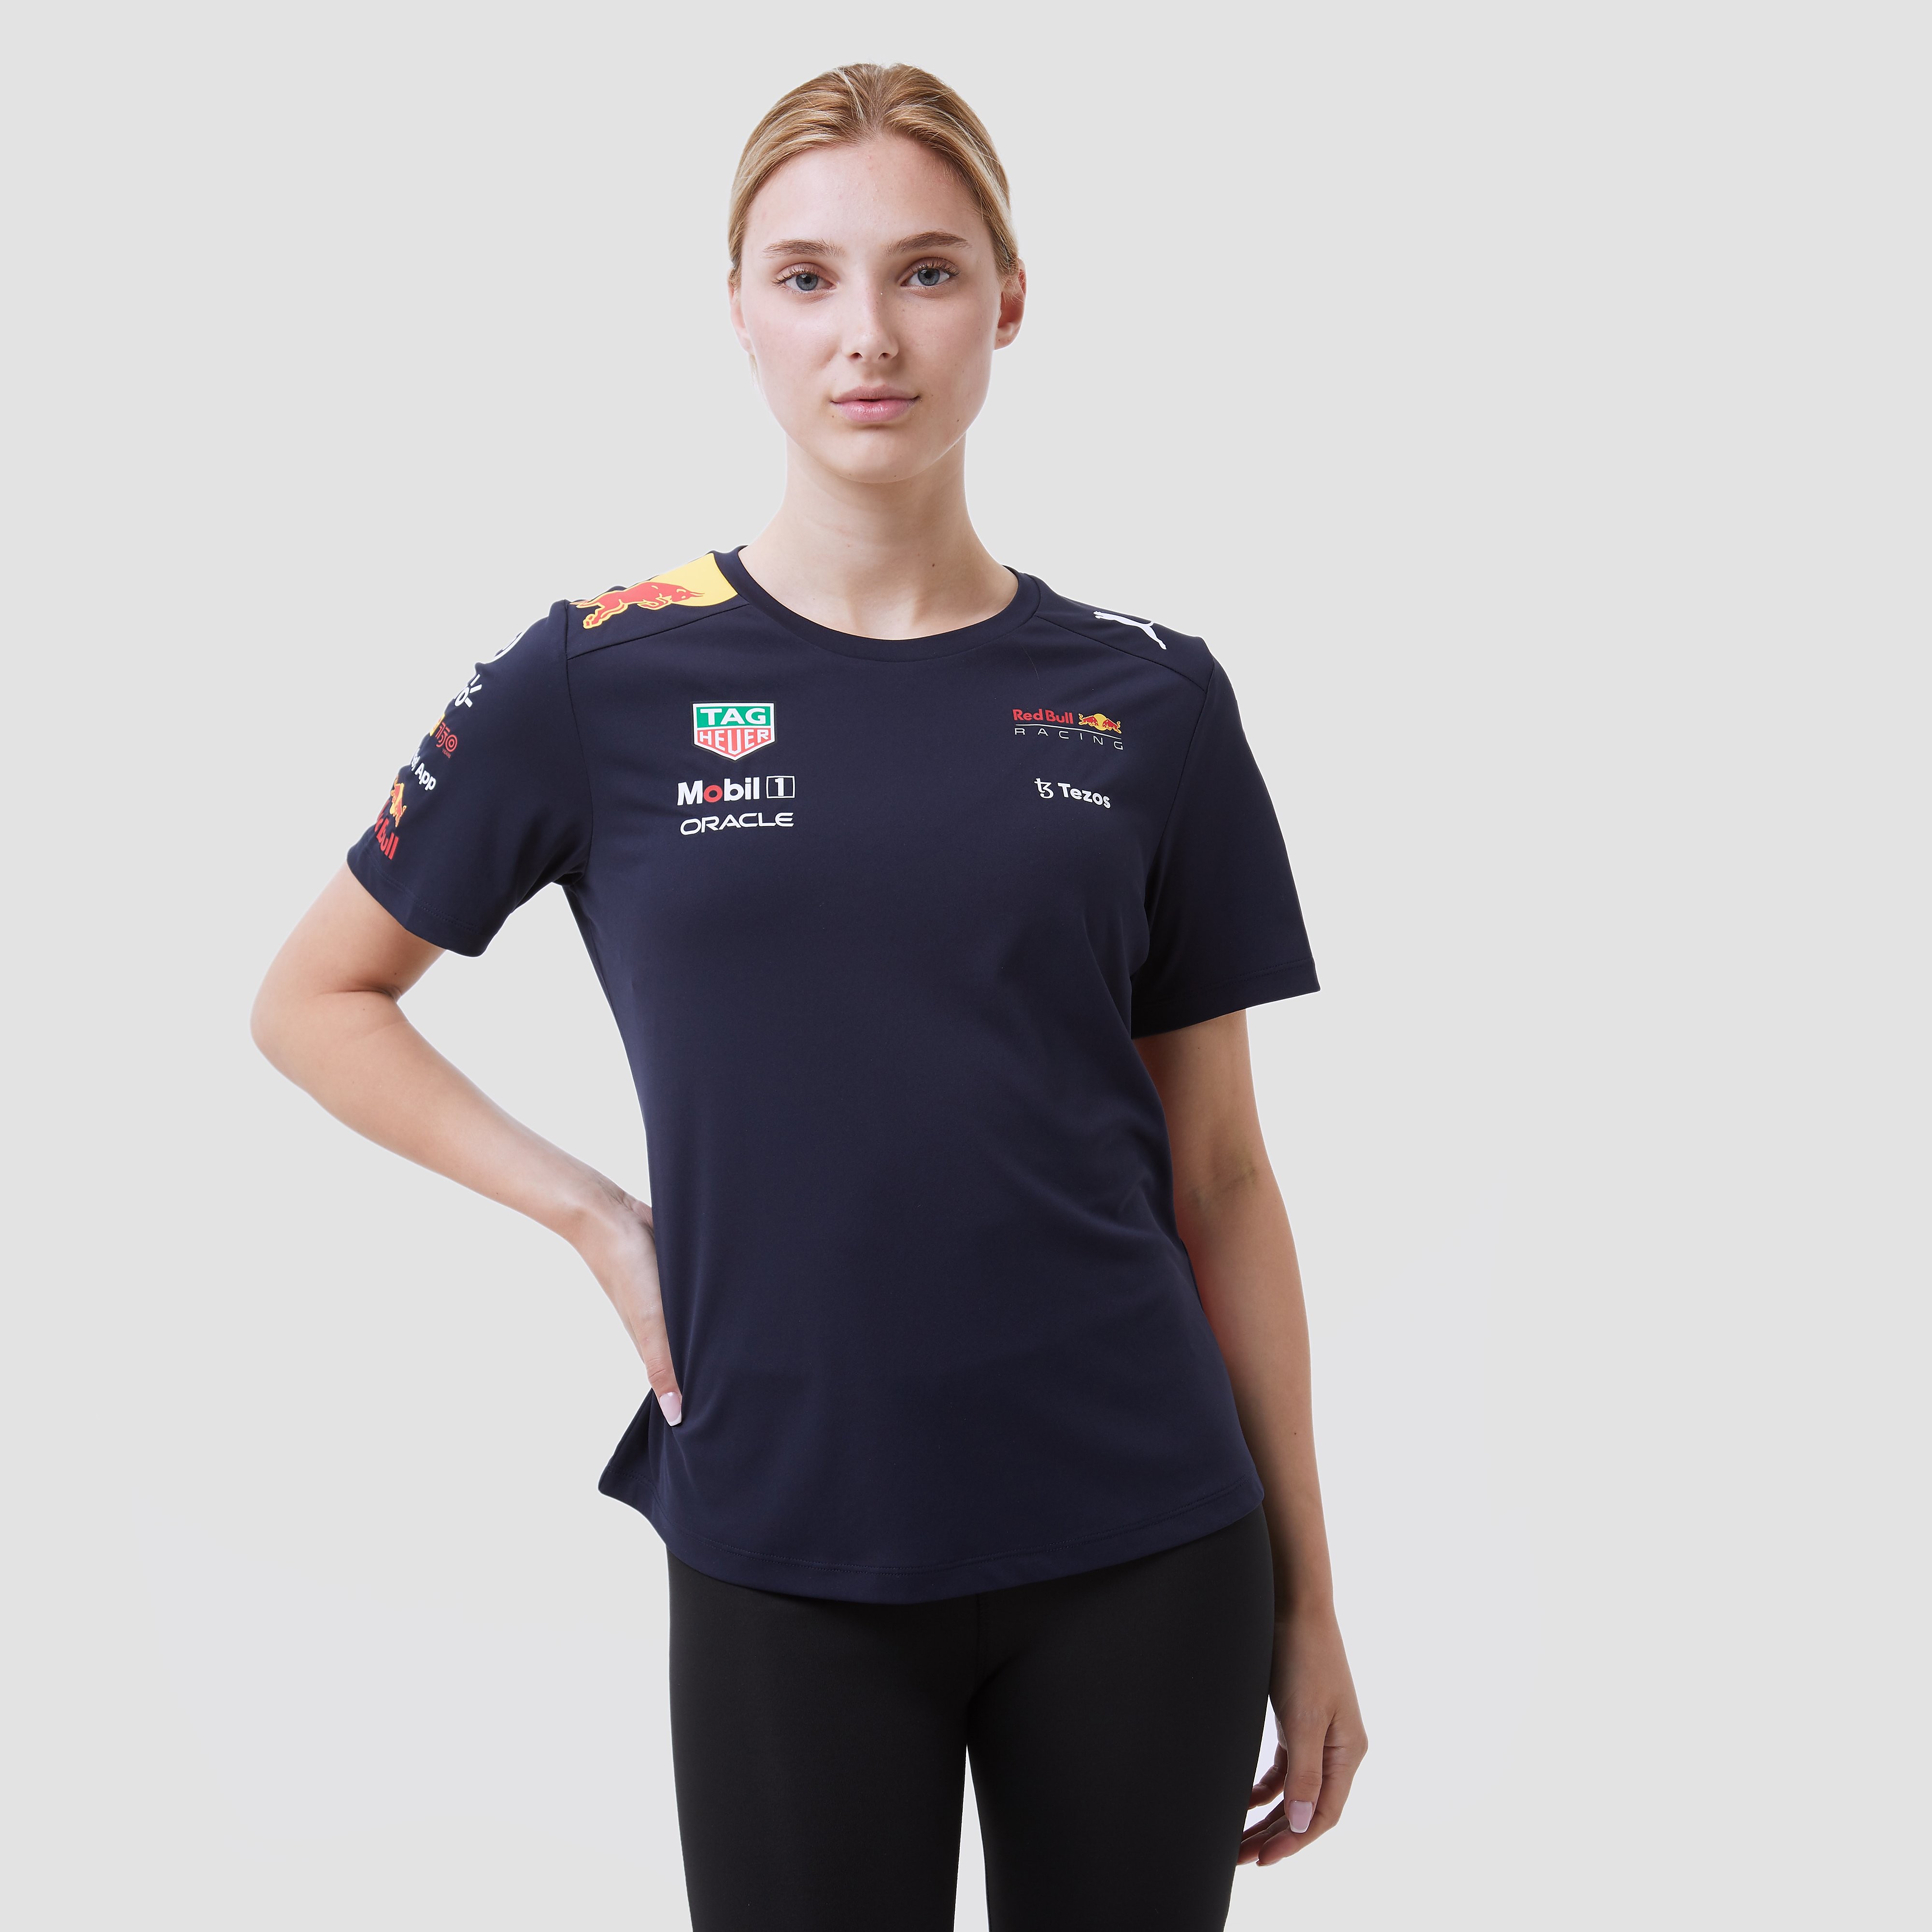 PUMA Red Bull Racing Team Sportshirt Dames - Maat XS